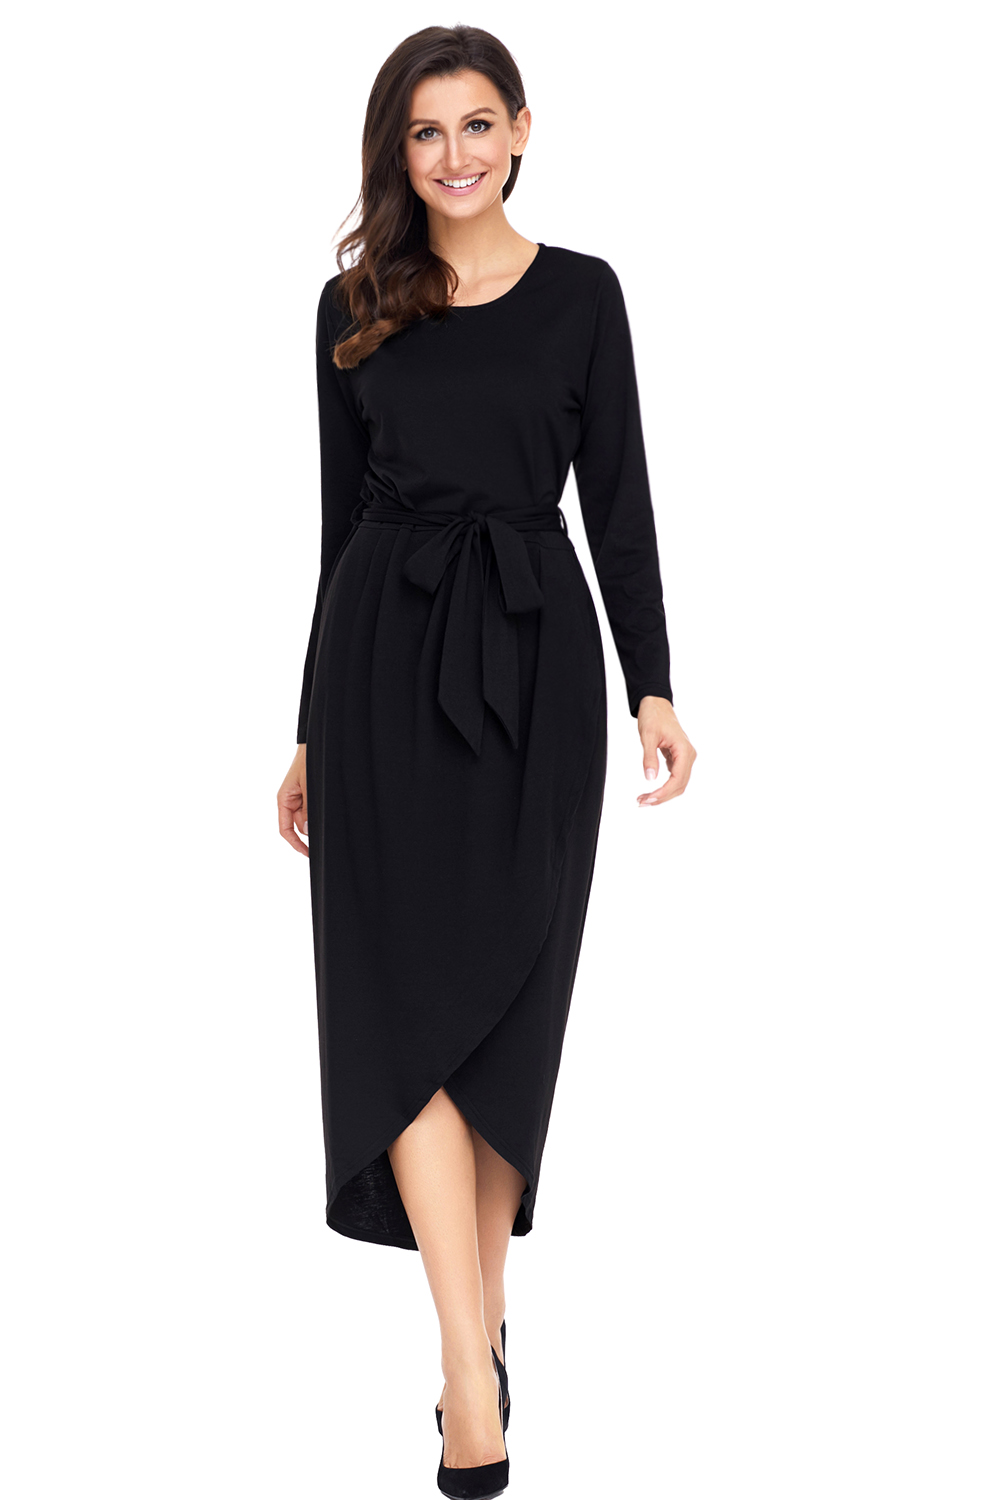 BY61818-2 Black Tulip Faux Wrap Sash Tie Jersey Dress